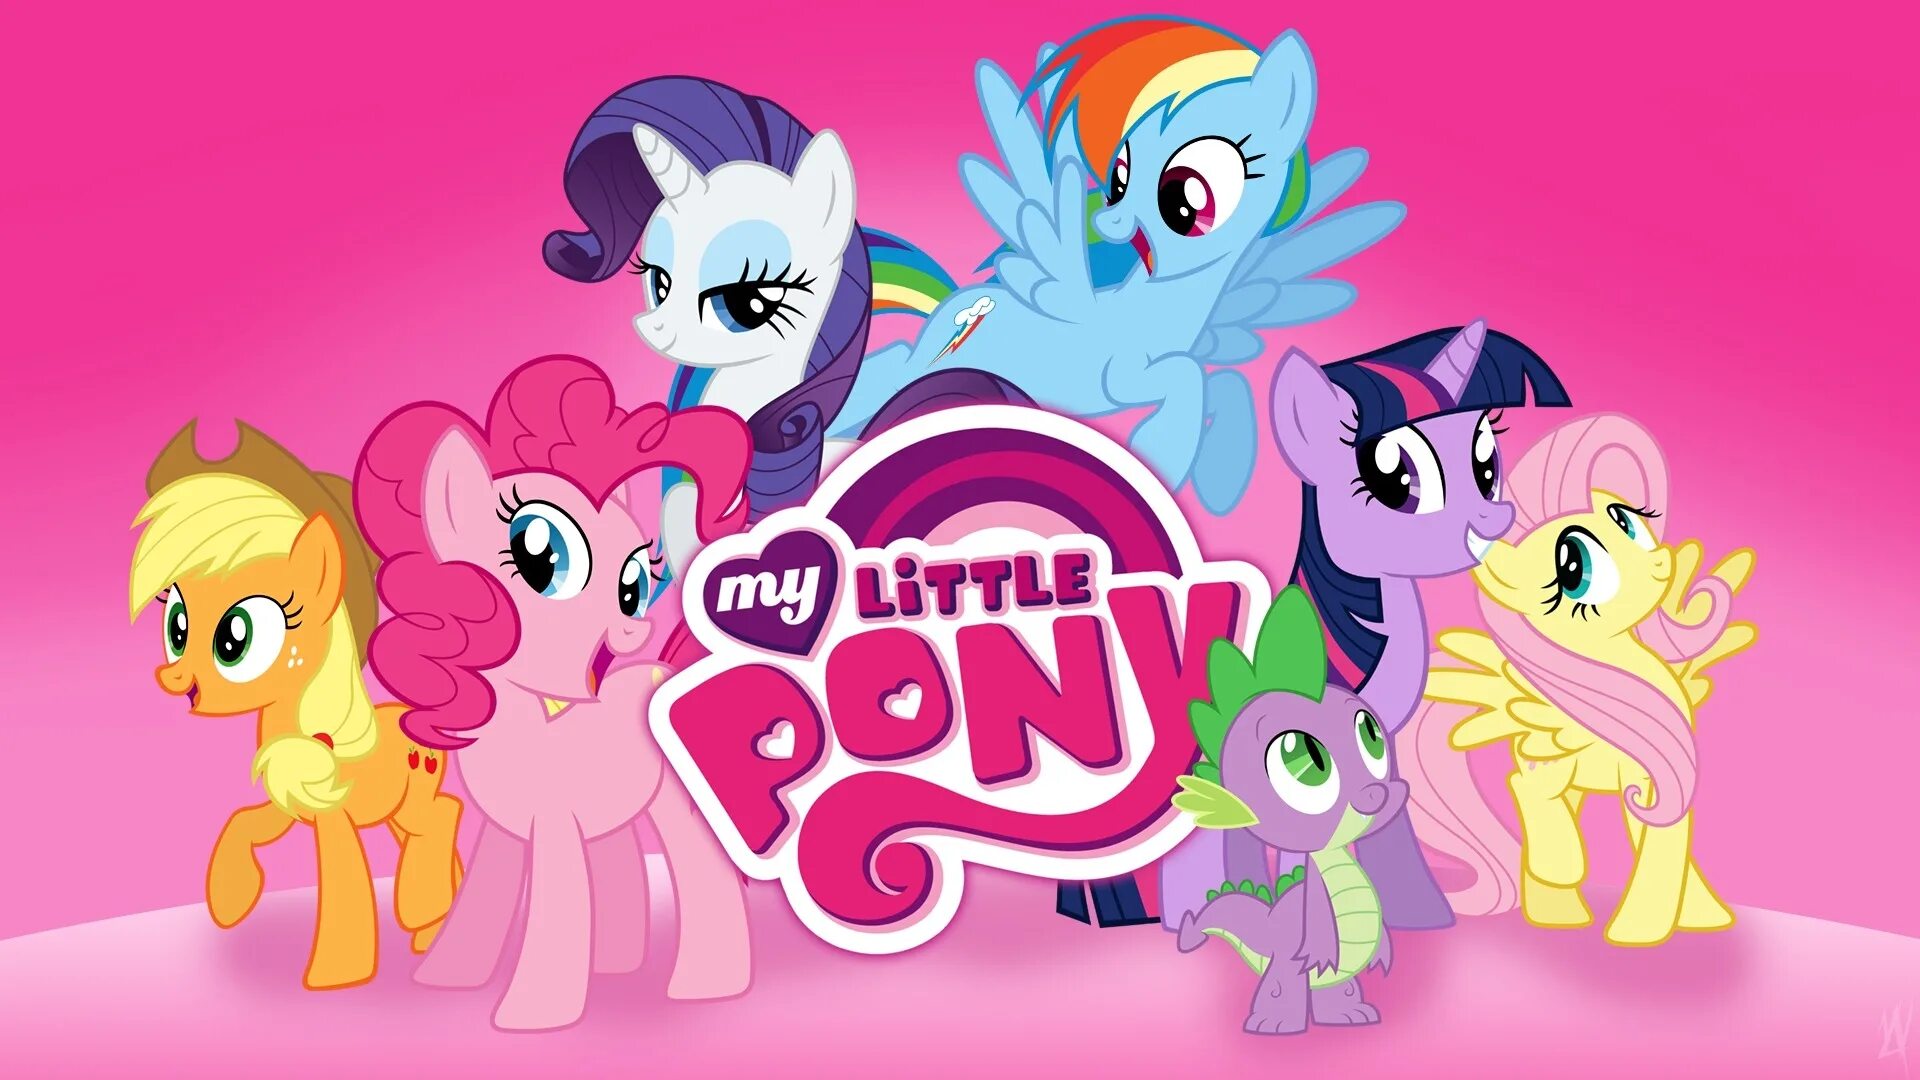 My little pony обновление. My little Pony. My little Pony Friendship is Magic игра.